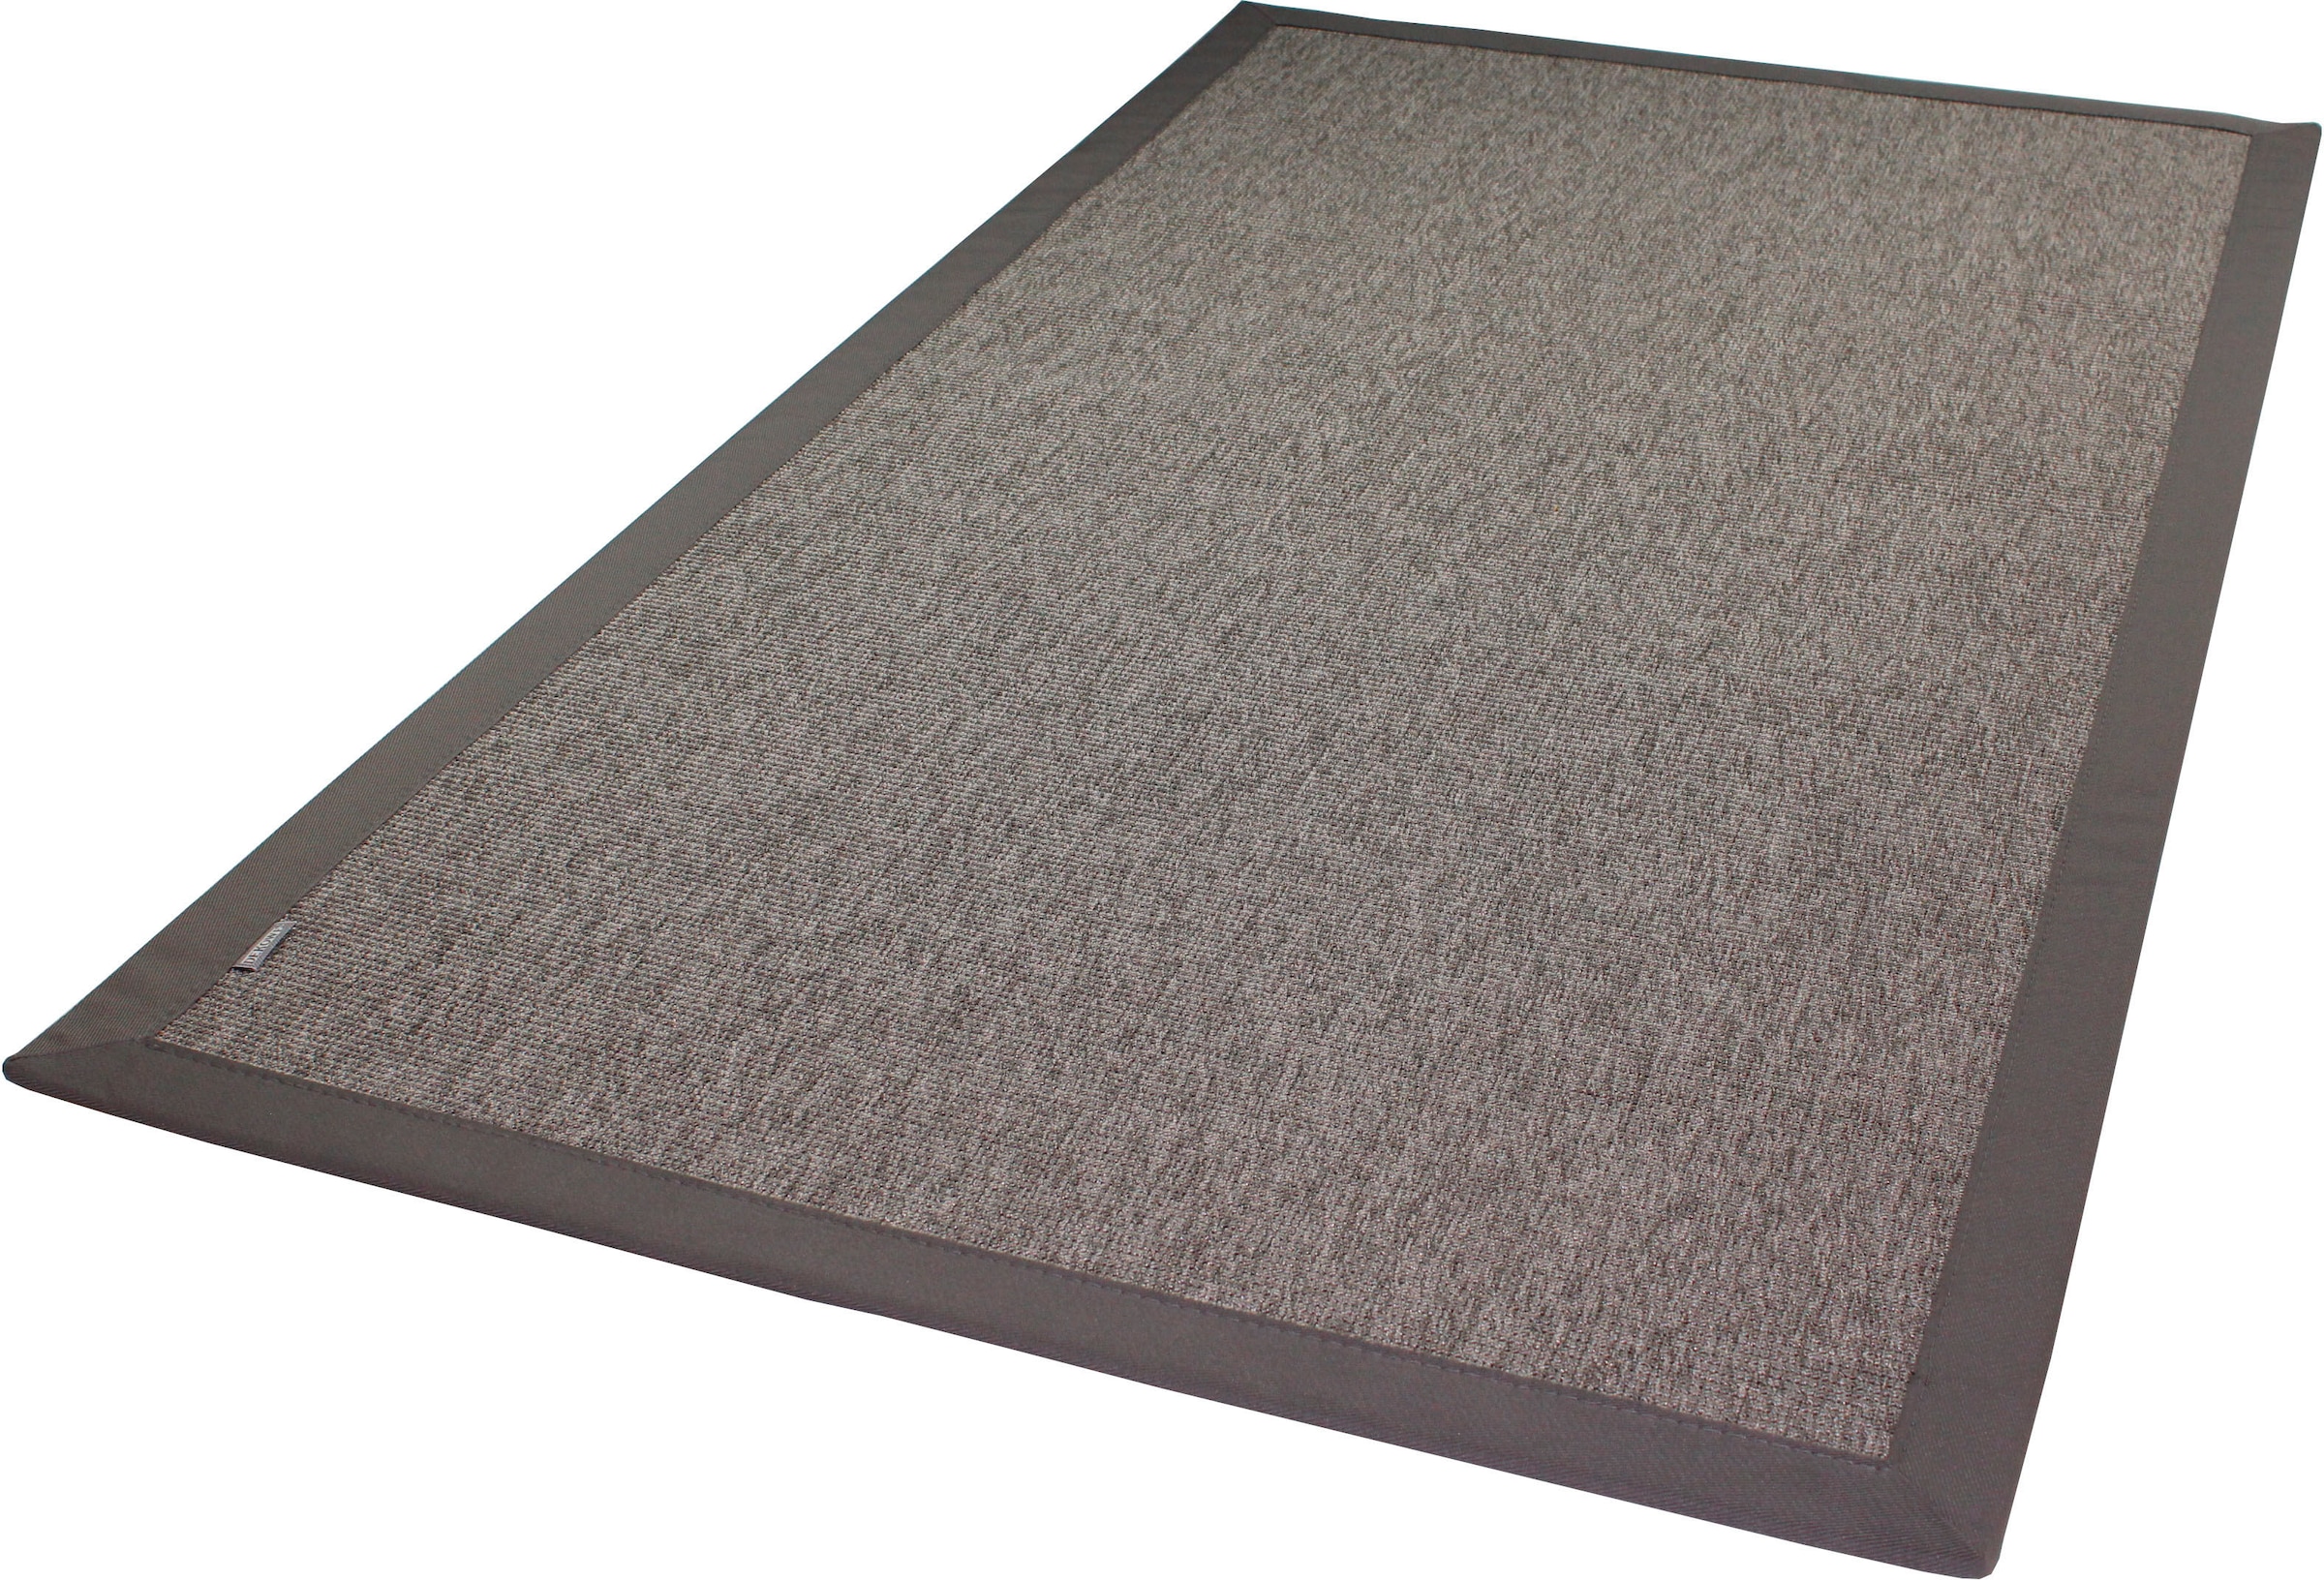 Dekowe Teppichboden »Naturino RipsS2 Spezial«, rechteckig, Flachgewebe, meliert, Sisal-Optik, In- und Outdoor geeignet